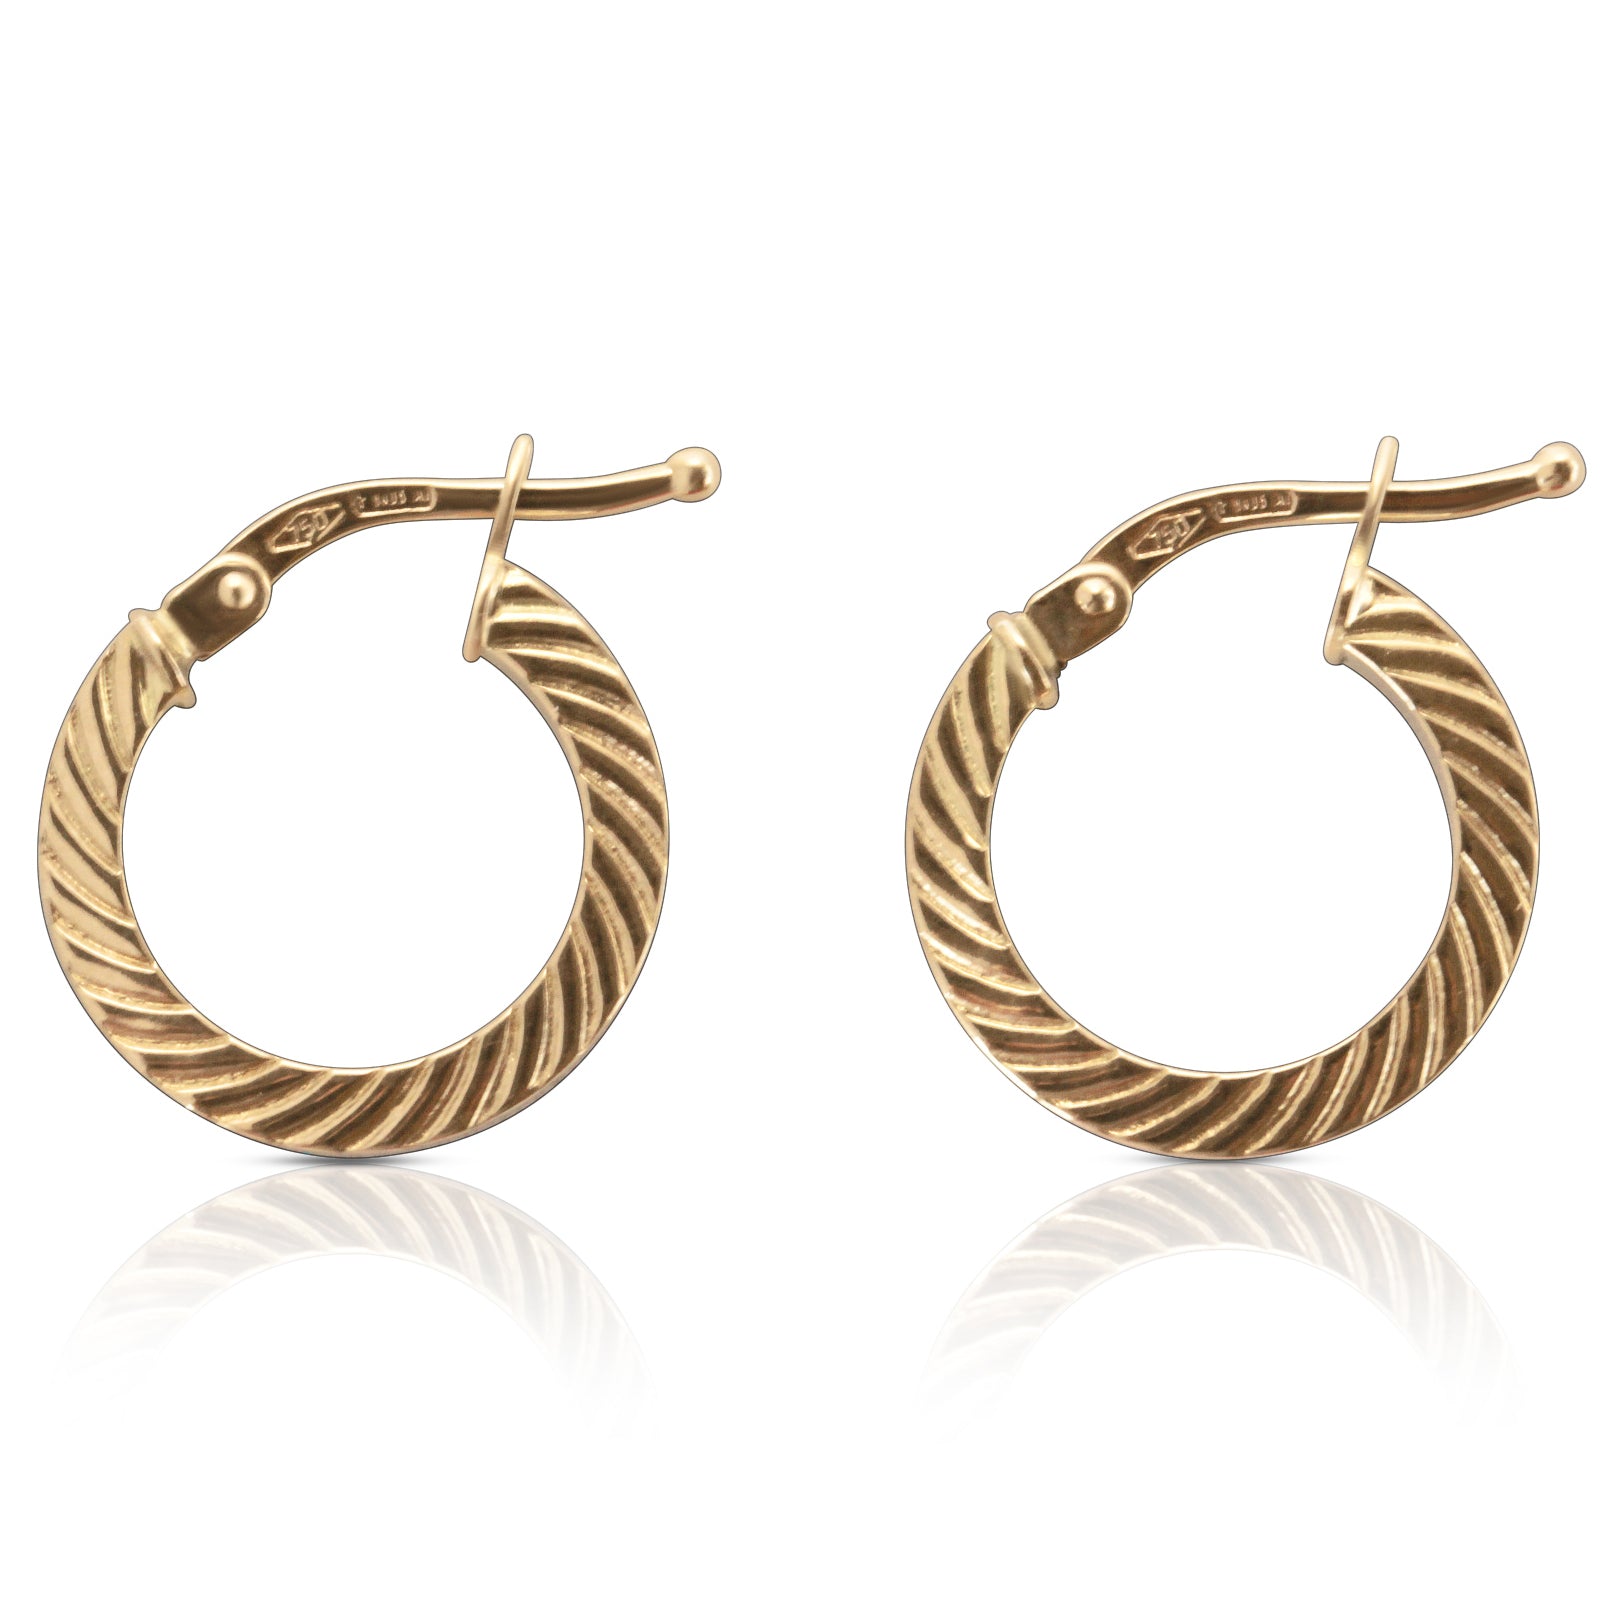 gold hoops earrings side angle